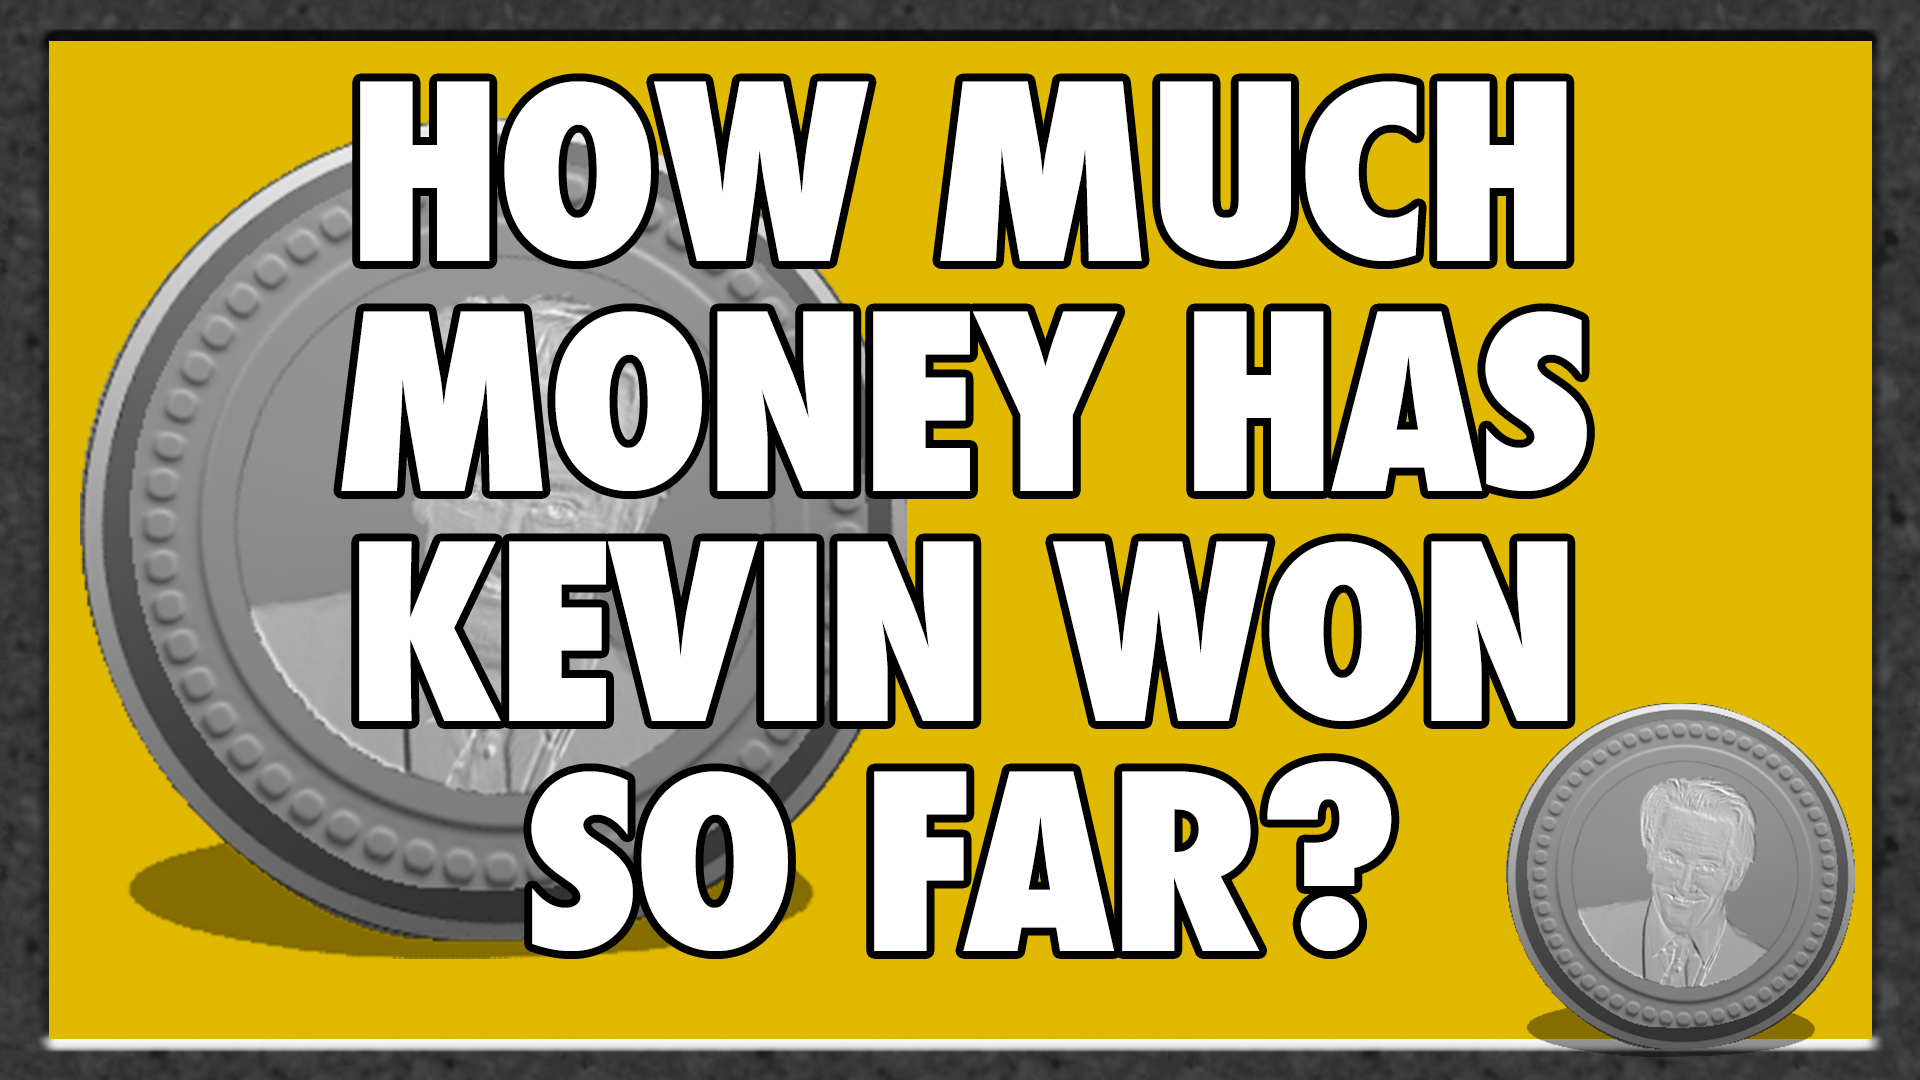 How much money has Kevin won so far?